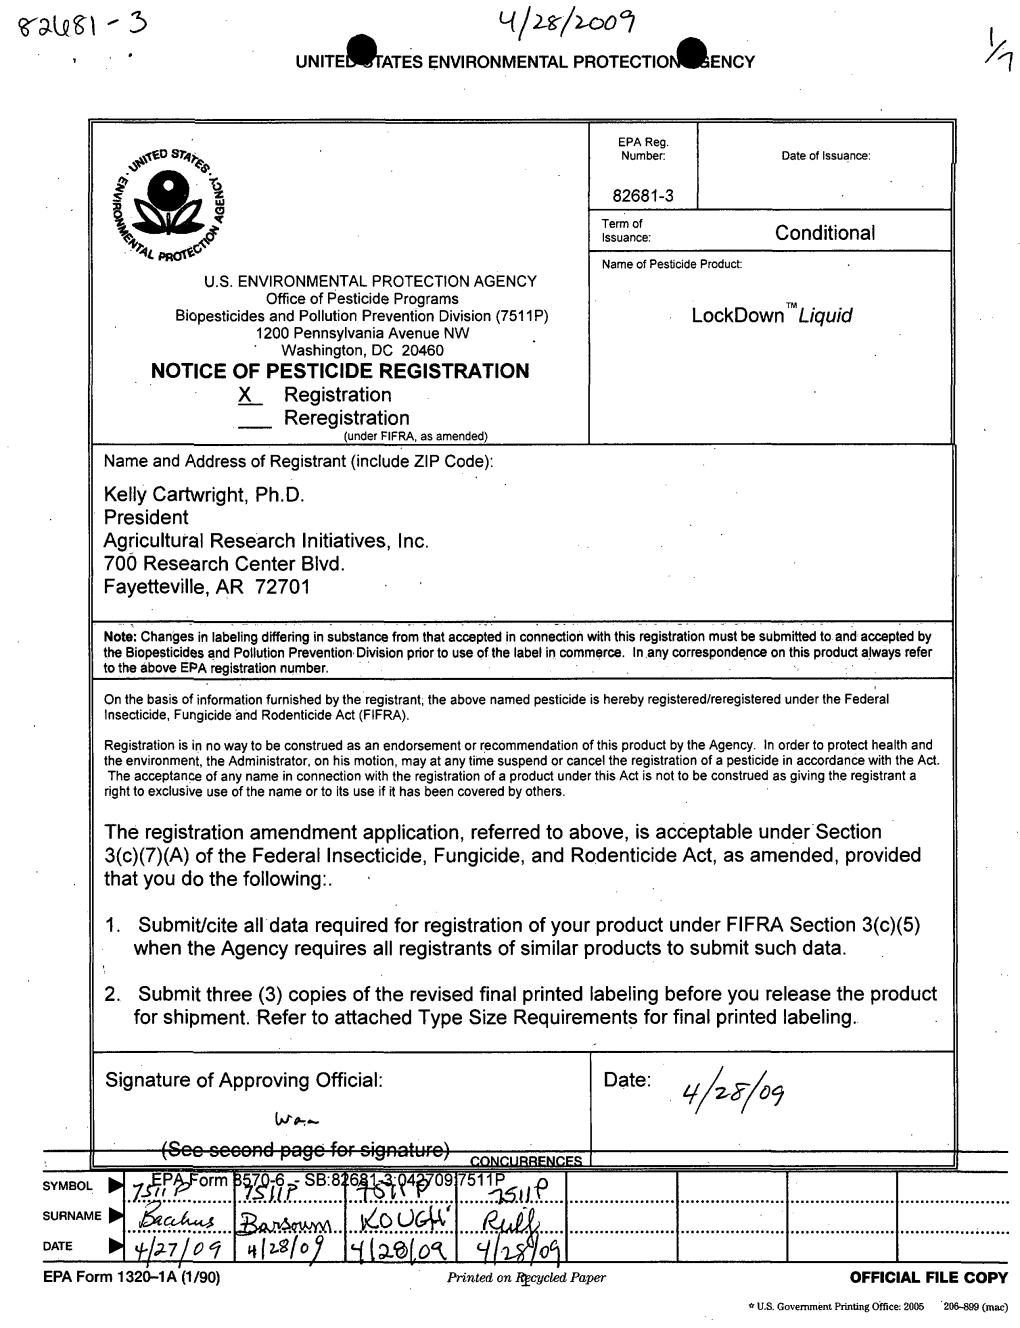 U.S. EPA, Pesticide Product Label, LOCKDOWN LIQUID, 04/28/2009